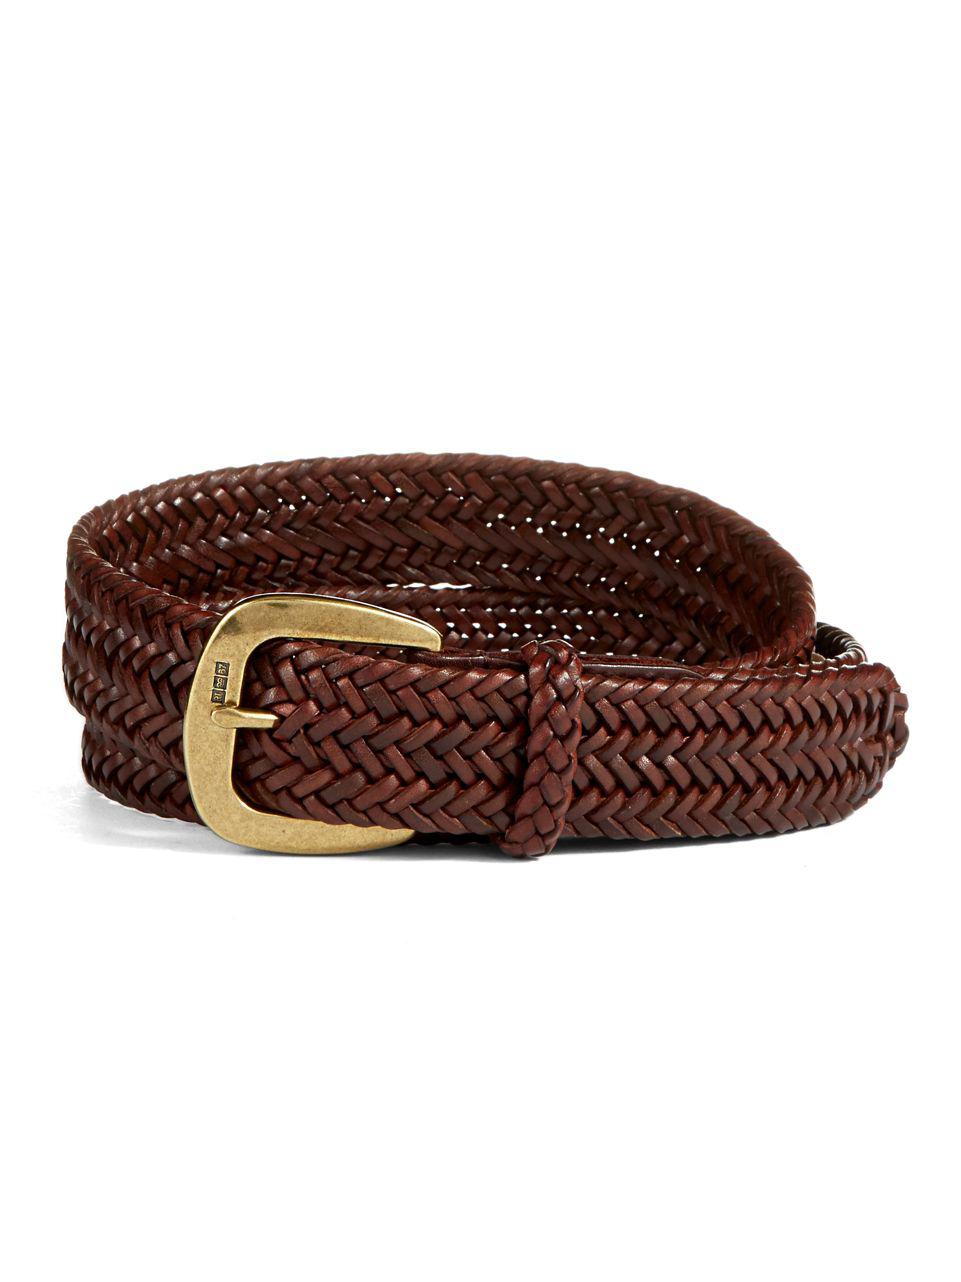 Lyst - Polo Ralph Lauren Derby Braid Leather Belt in Brown for Men